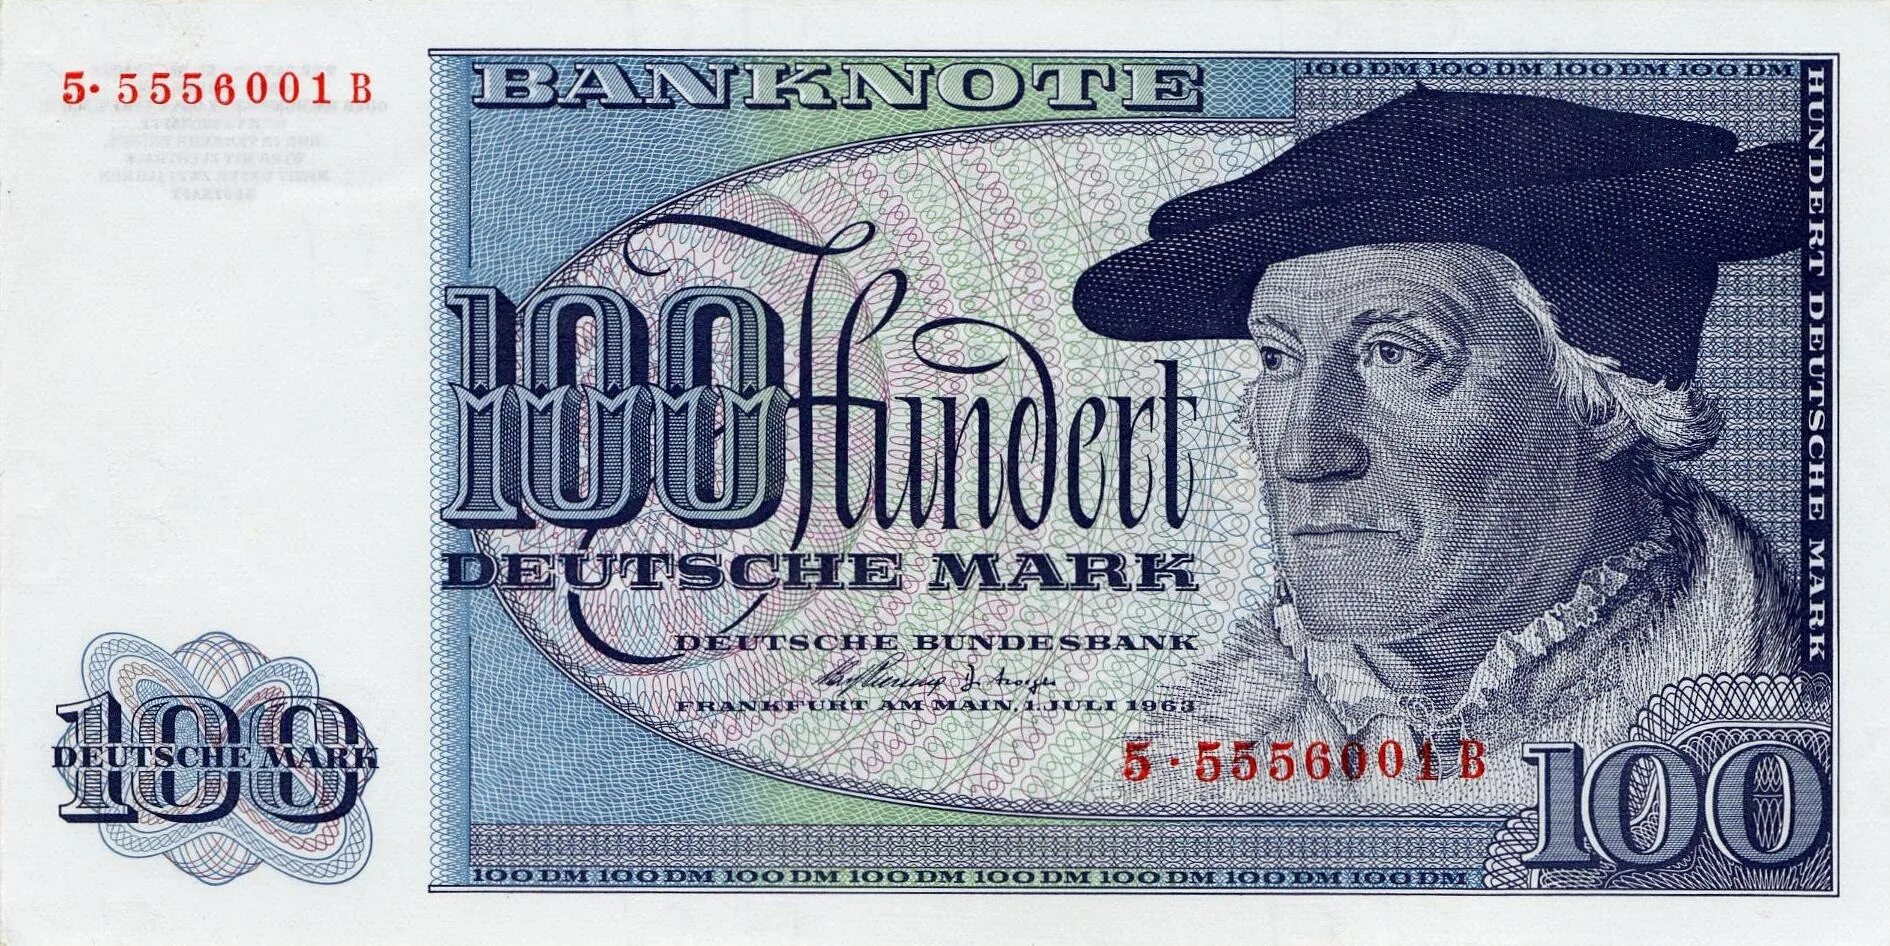 100 Дойч марок. Валюта Германии марка. Дойч марки ФРГ. 100 Марок Германия банкнота.